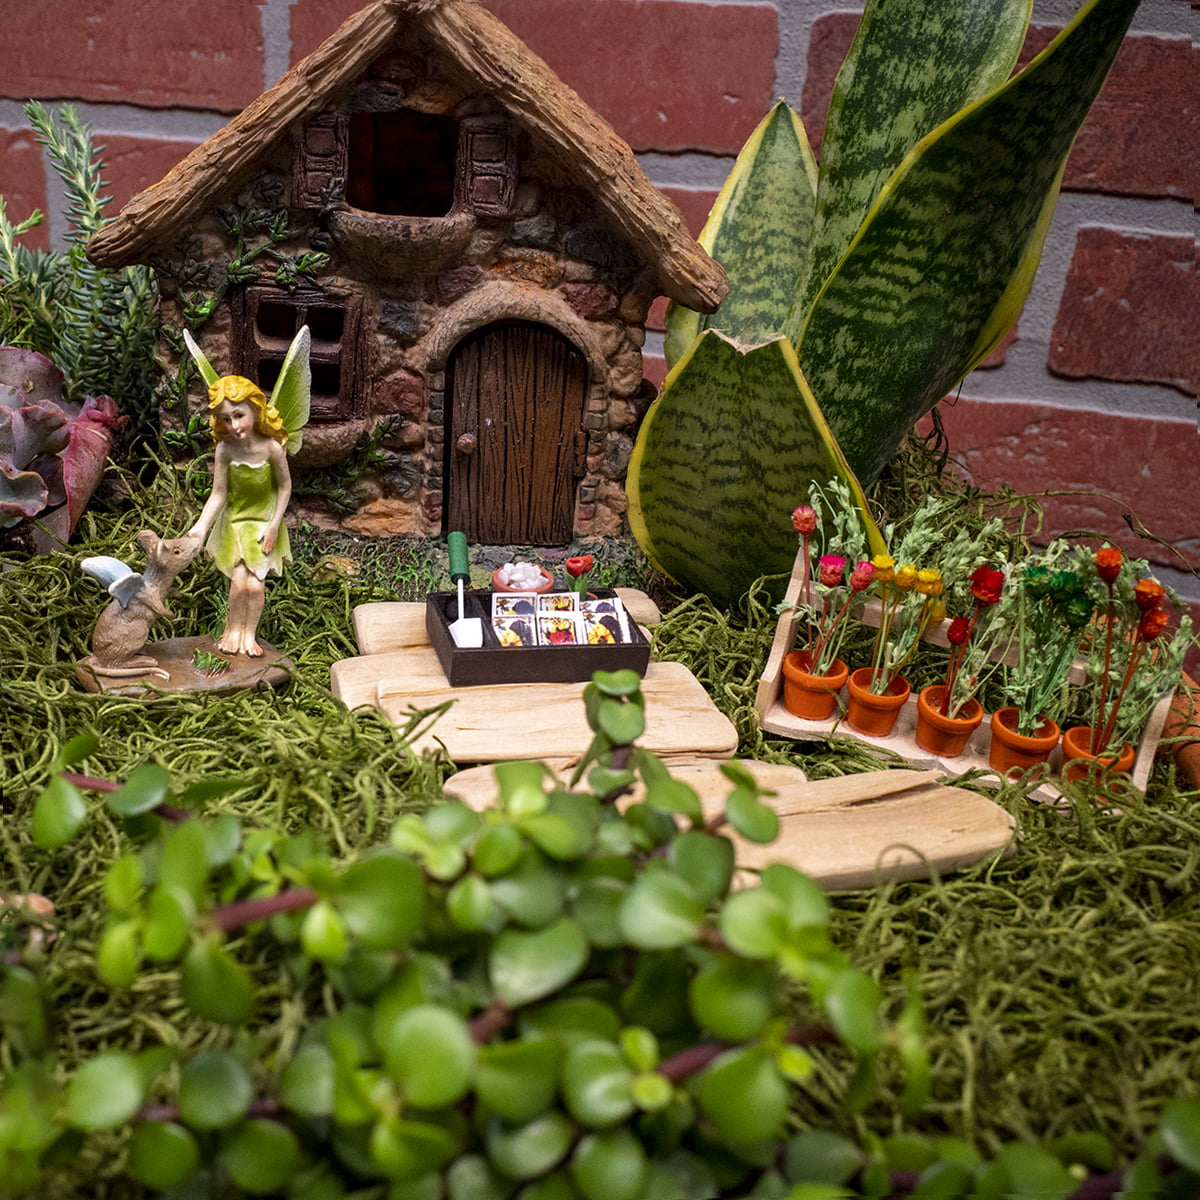 Details about   1:12 Dollhouse Miniatures Decor Gardening Box,Pulling Cart Garden Tools Kids DIY